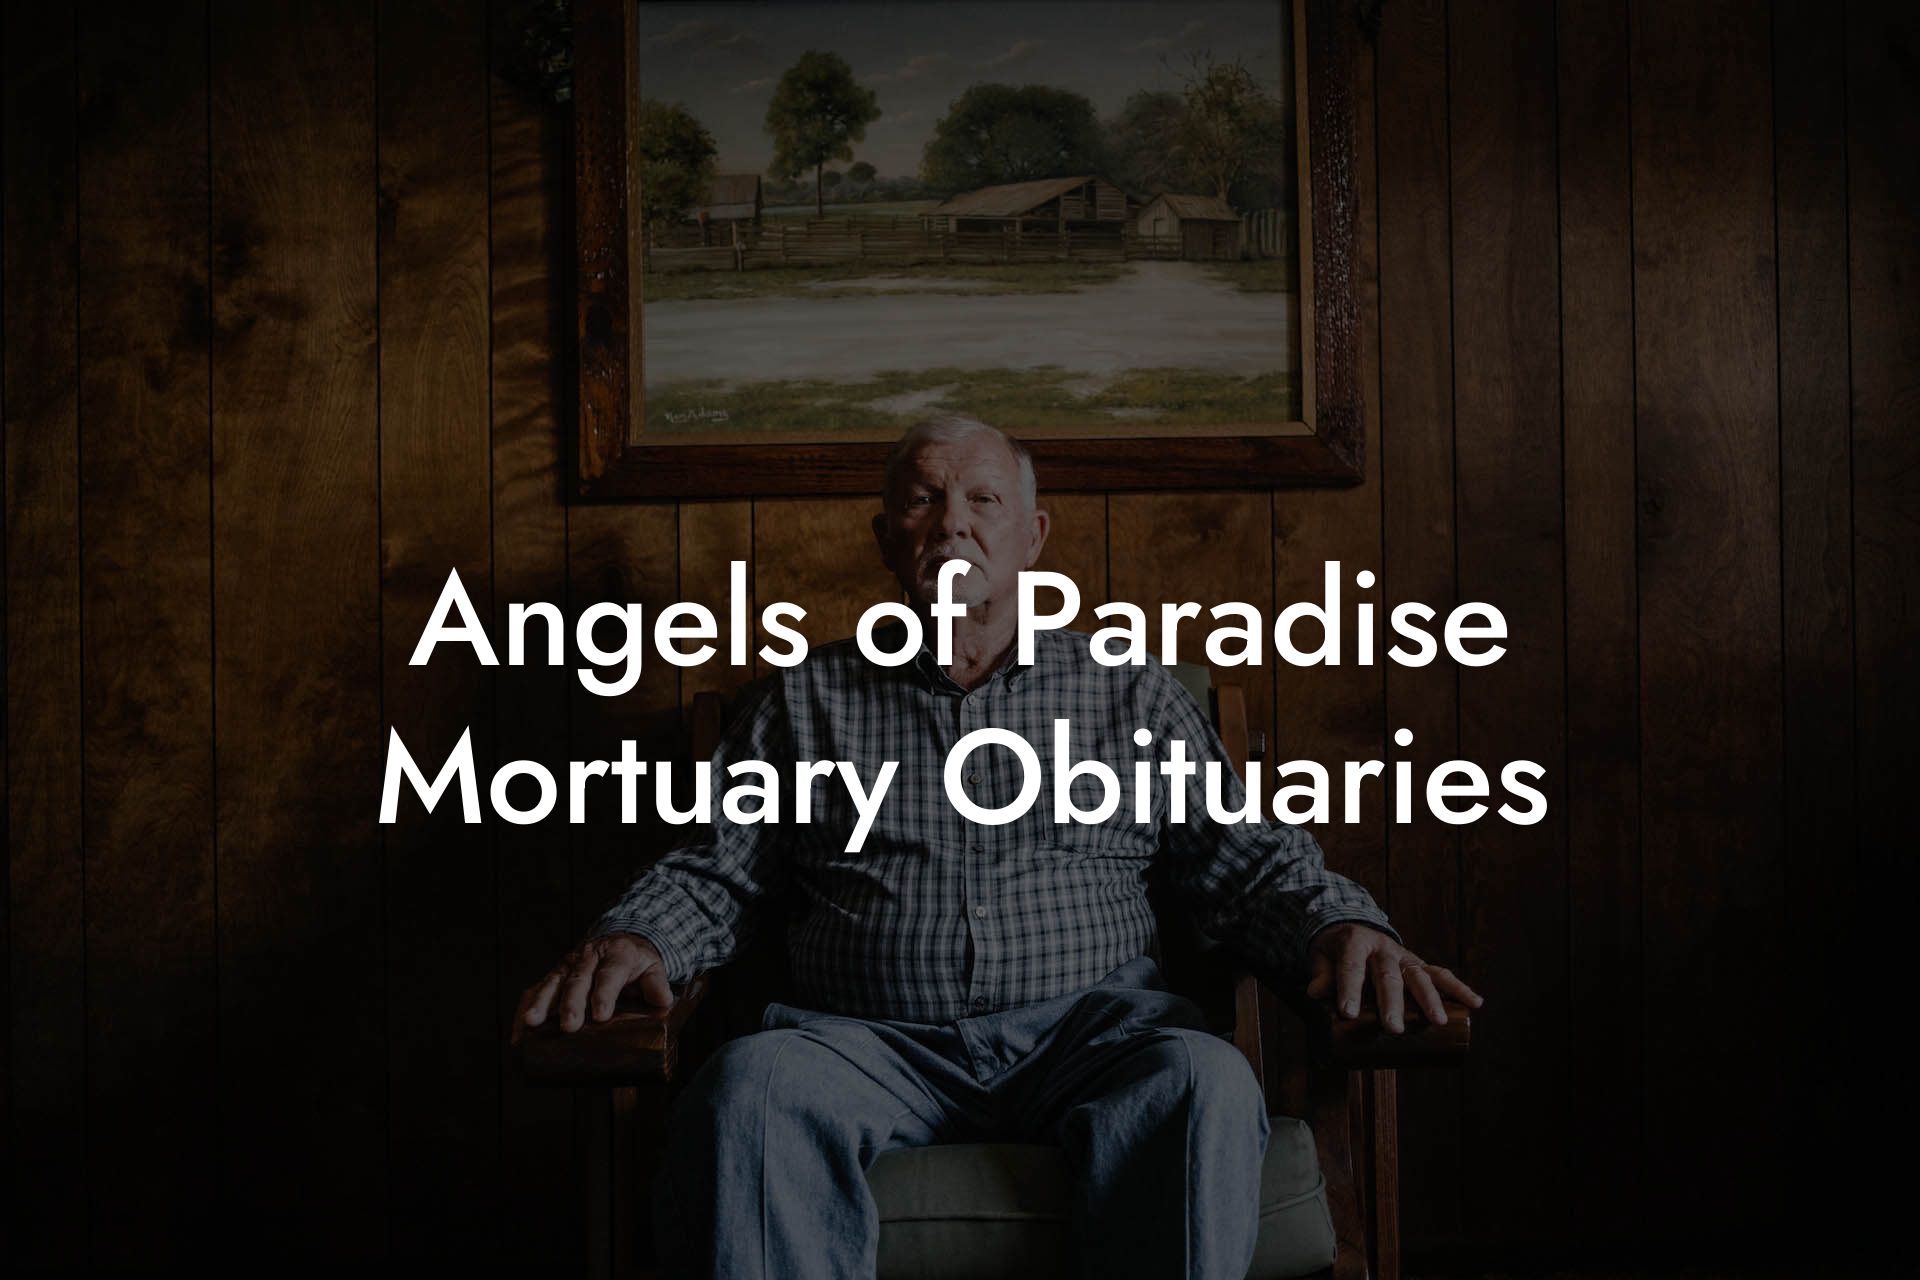 Angels of Paradise Mortuary Obituaries